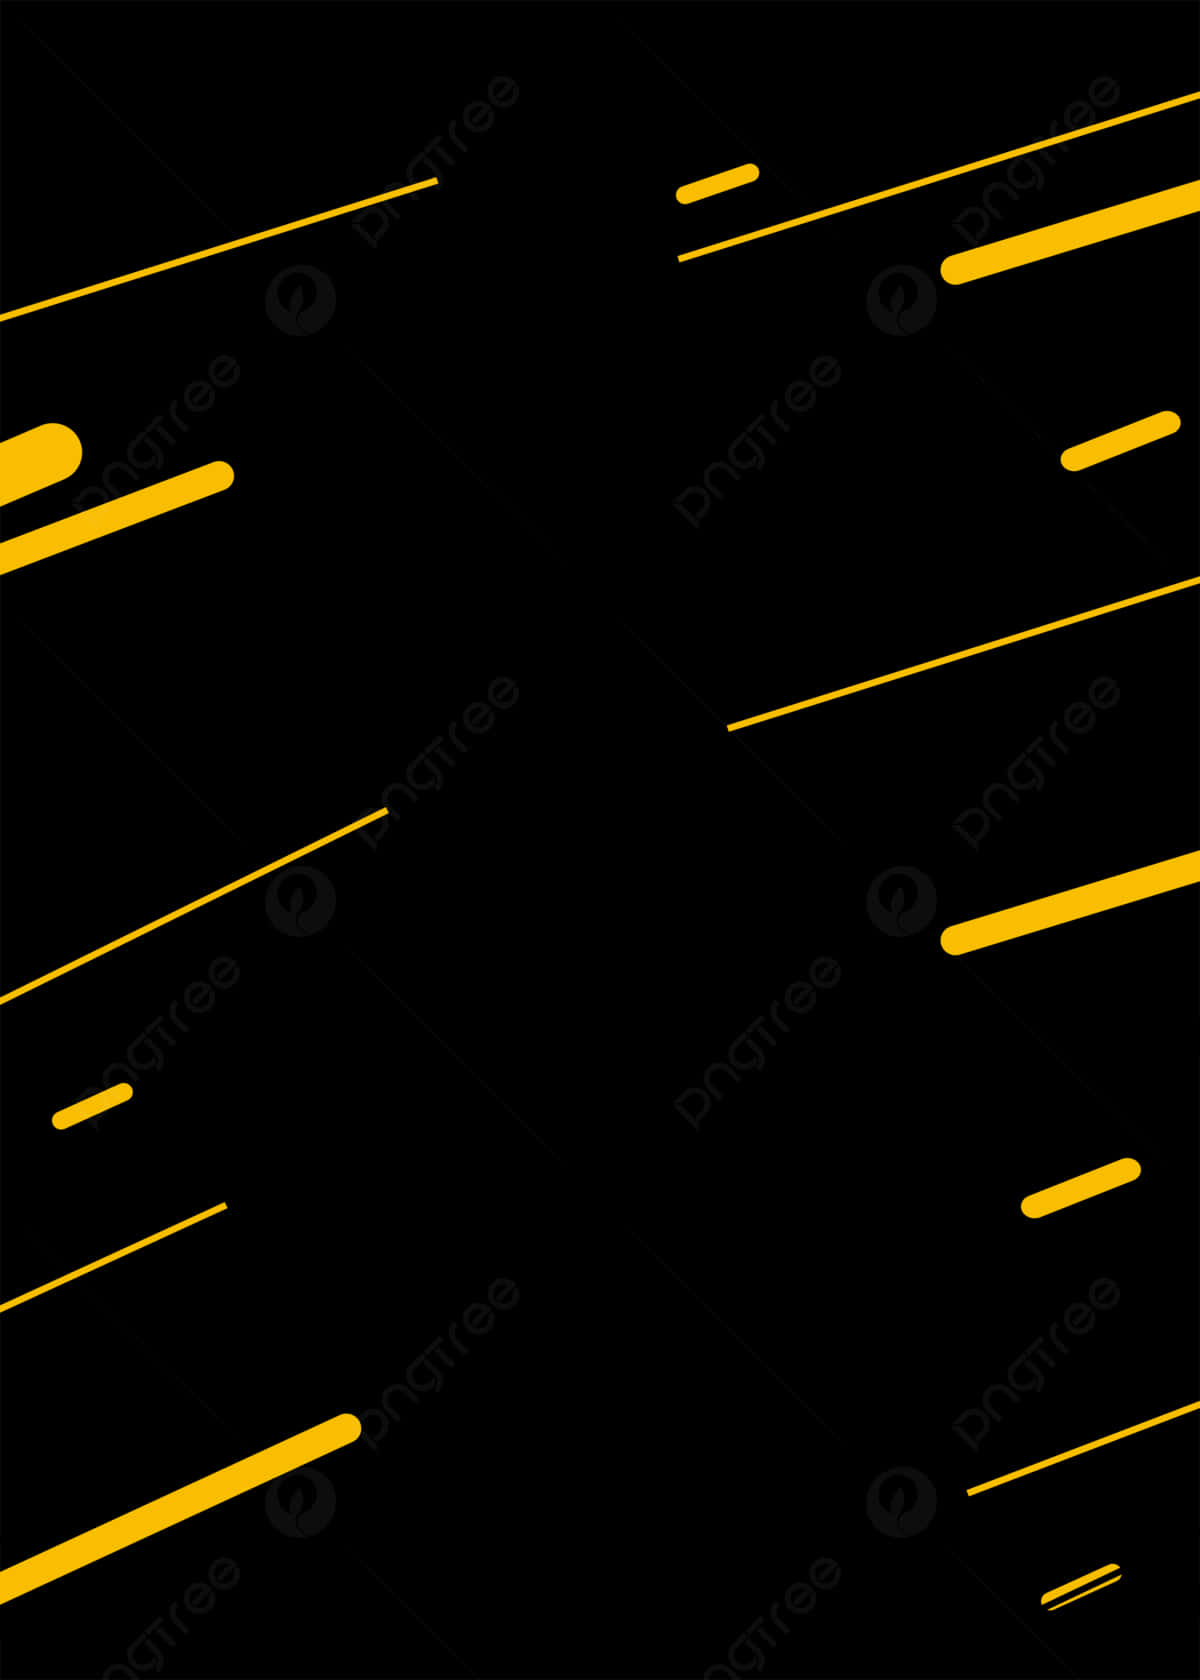 A bold black, yellow and white geometric backdrop